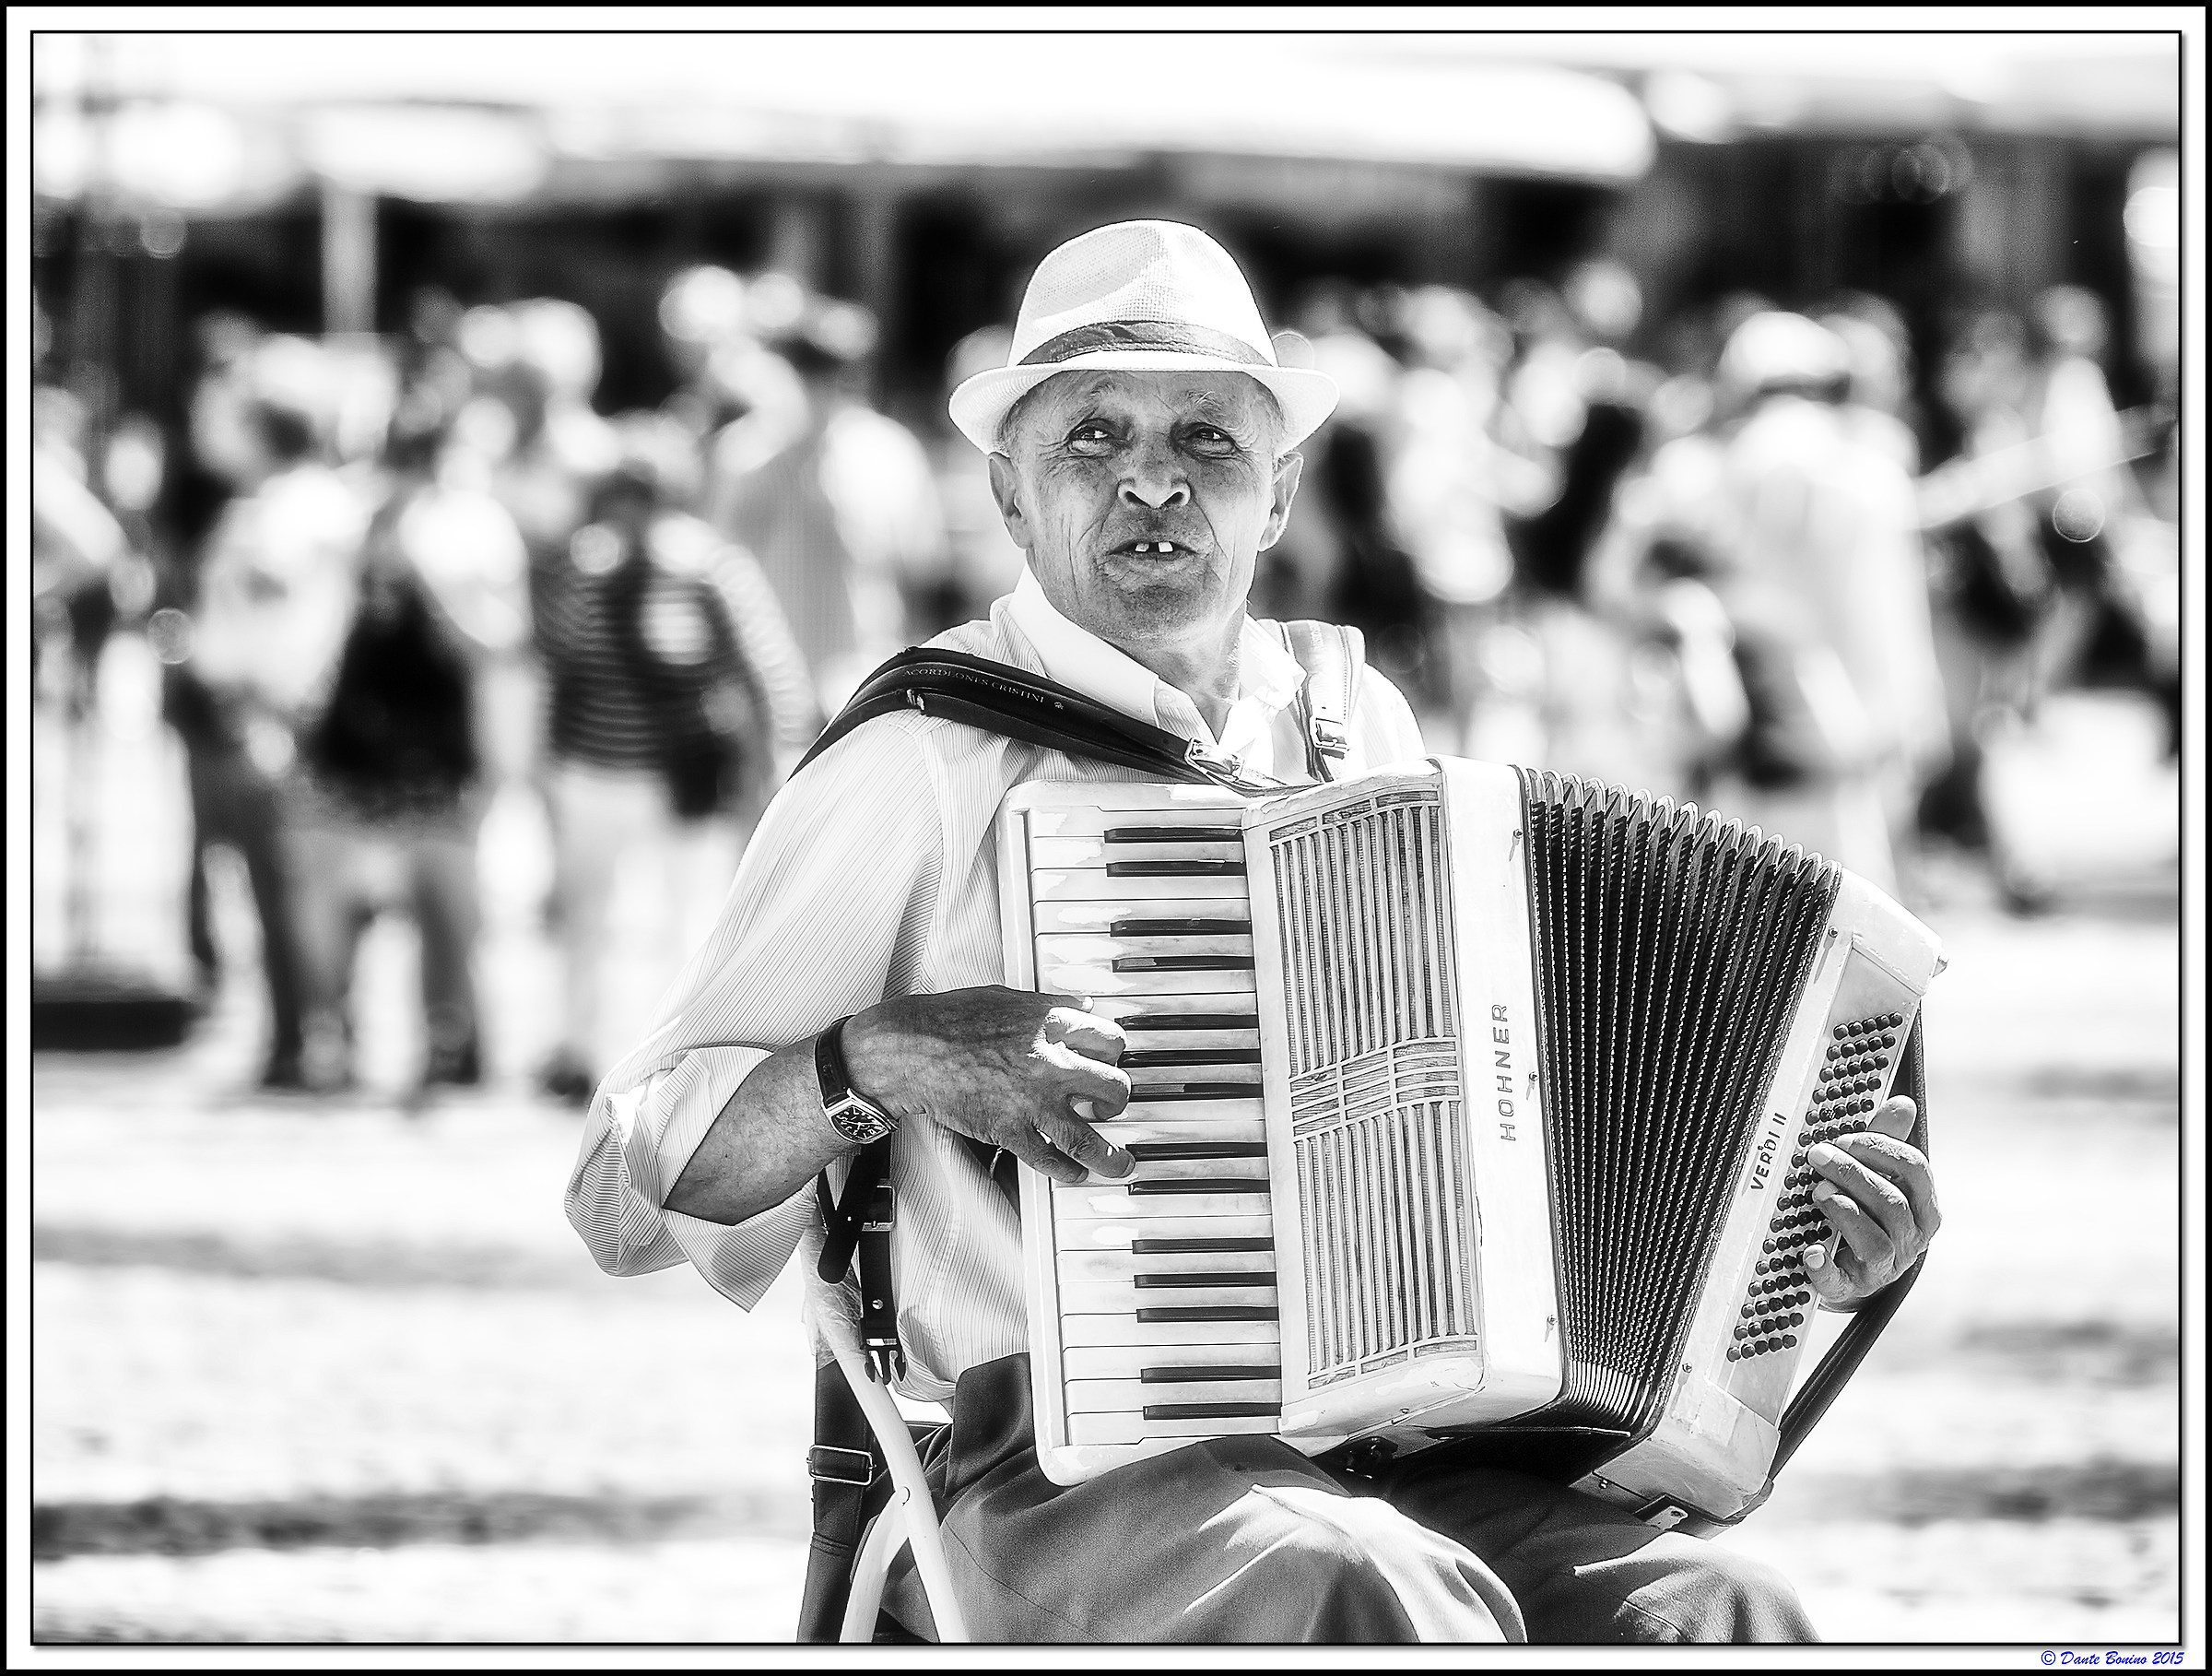 The accordion ......